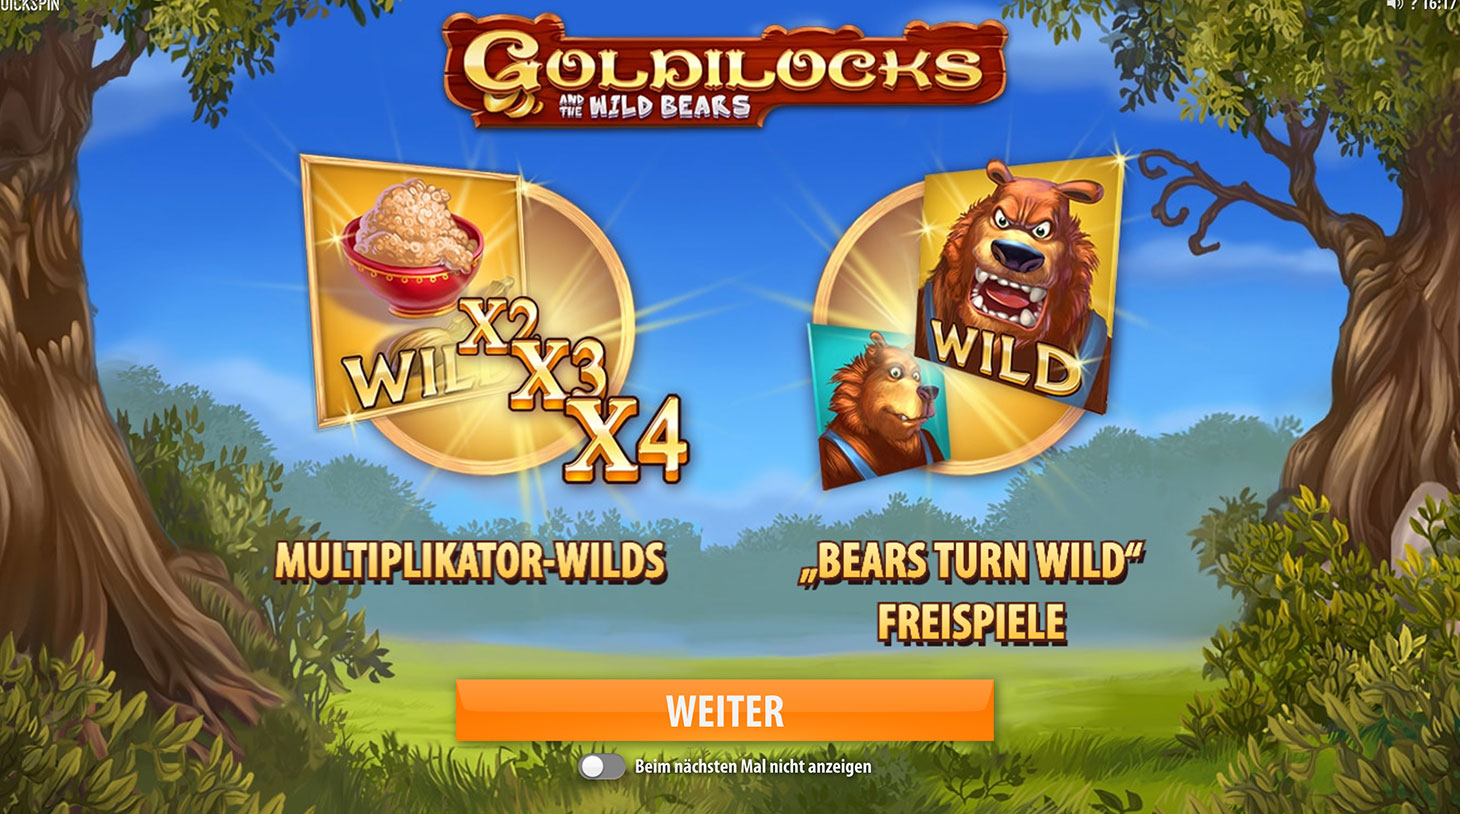 Goldilocks spielautomat